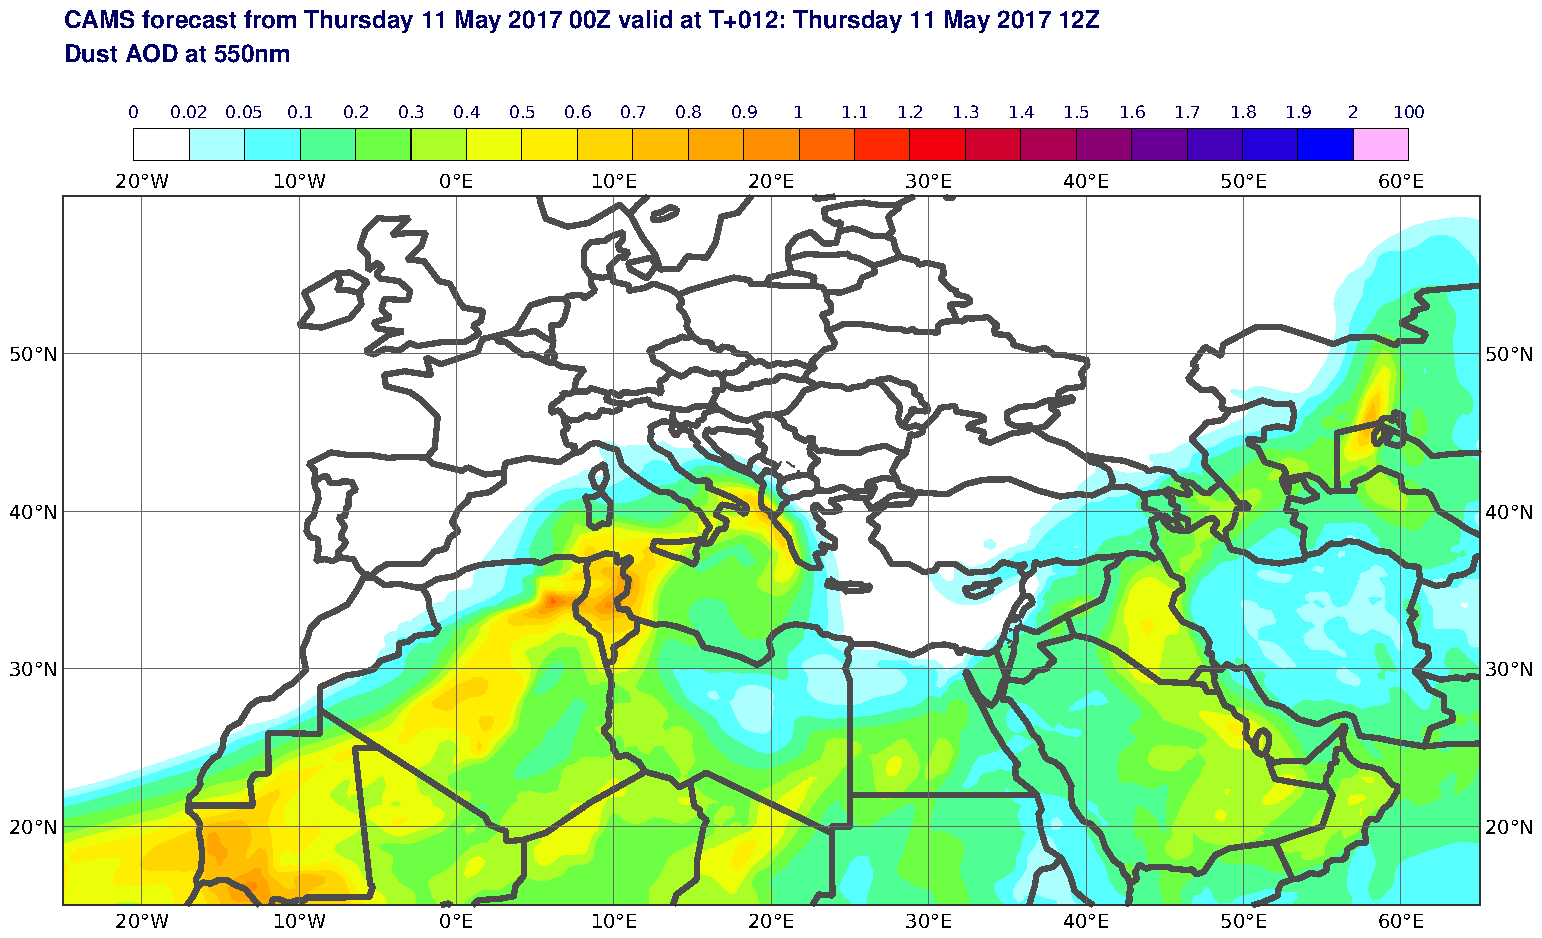 Dust AOD at 550nm valid at T12 - 2017-05-11 12:00